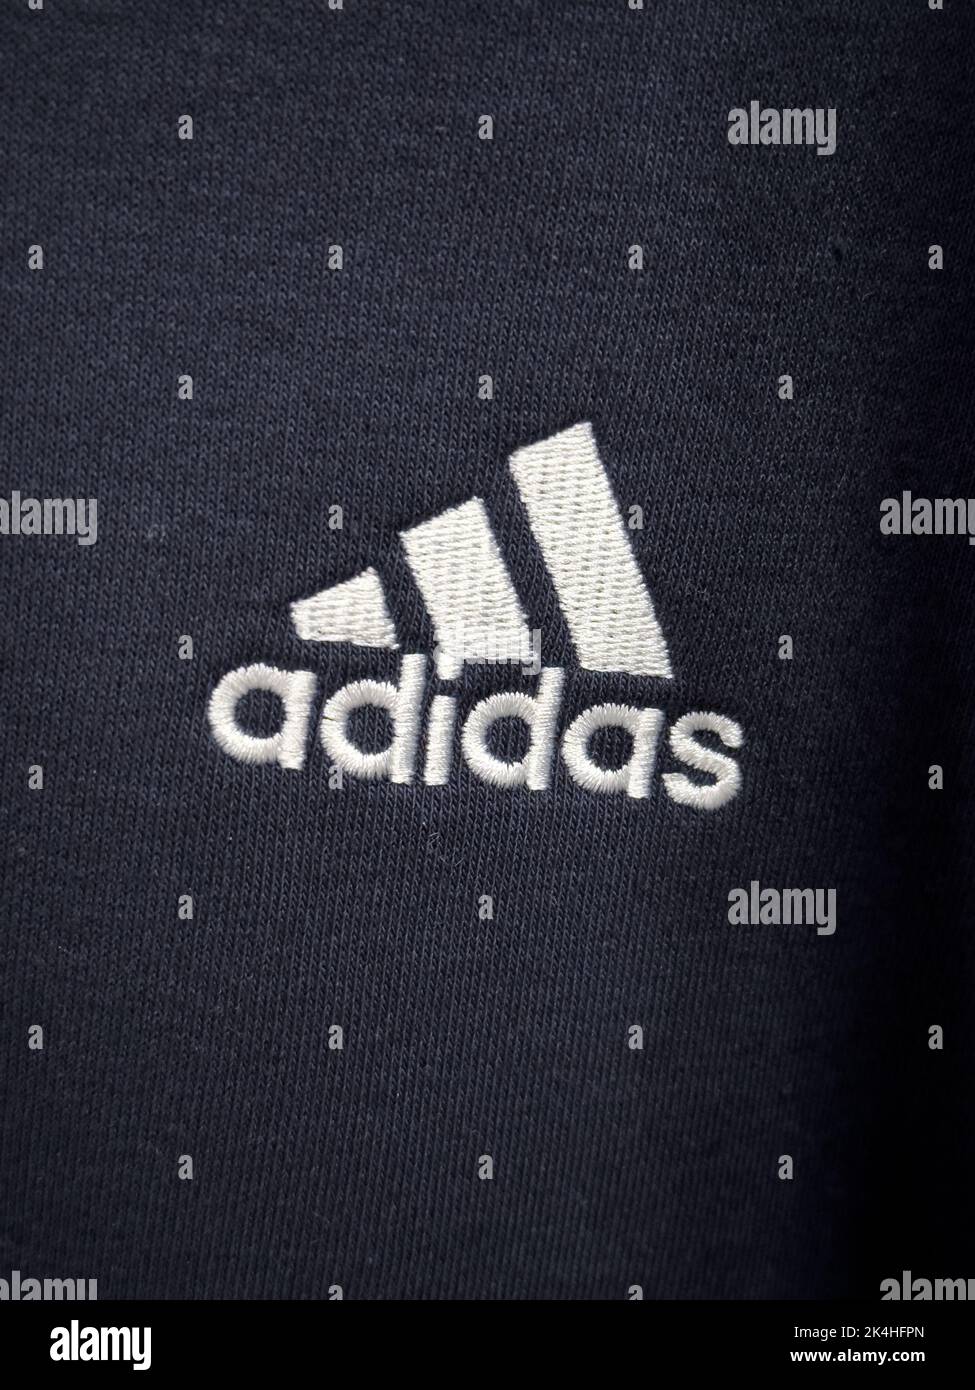 Adidas original hi-res stock photography and images - Alamy